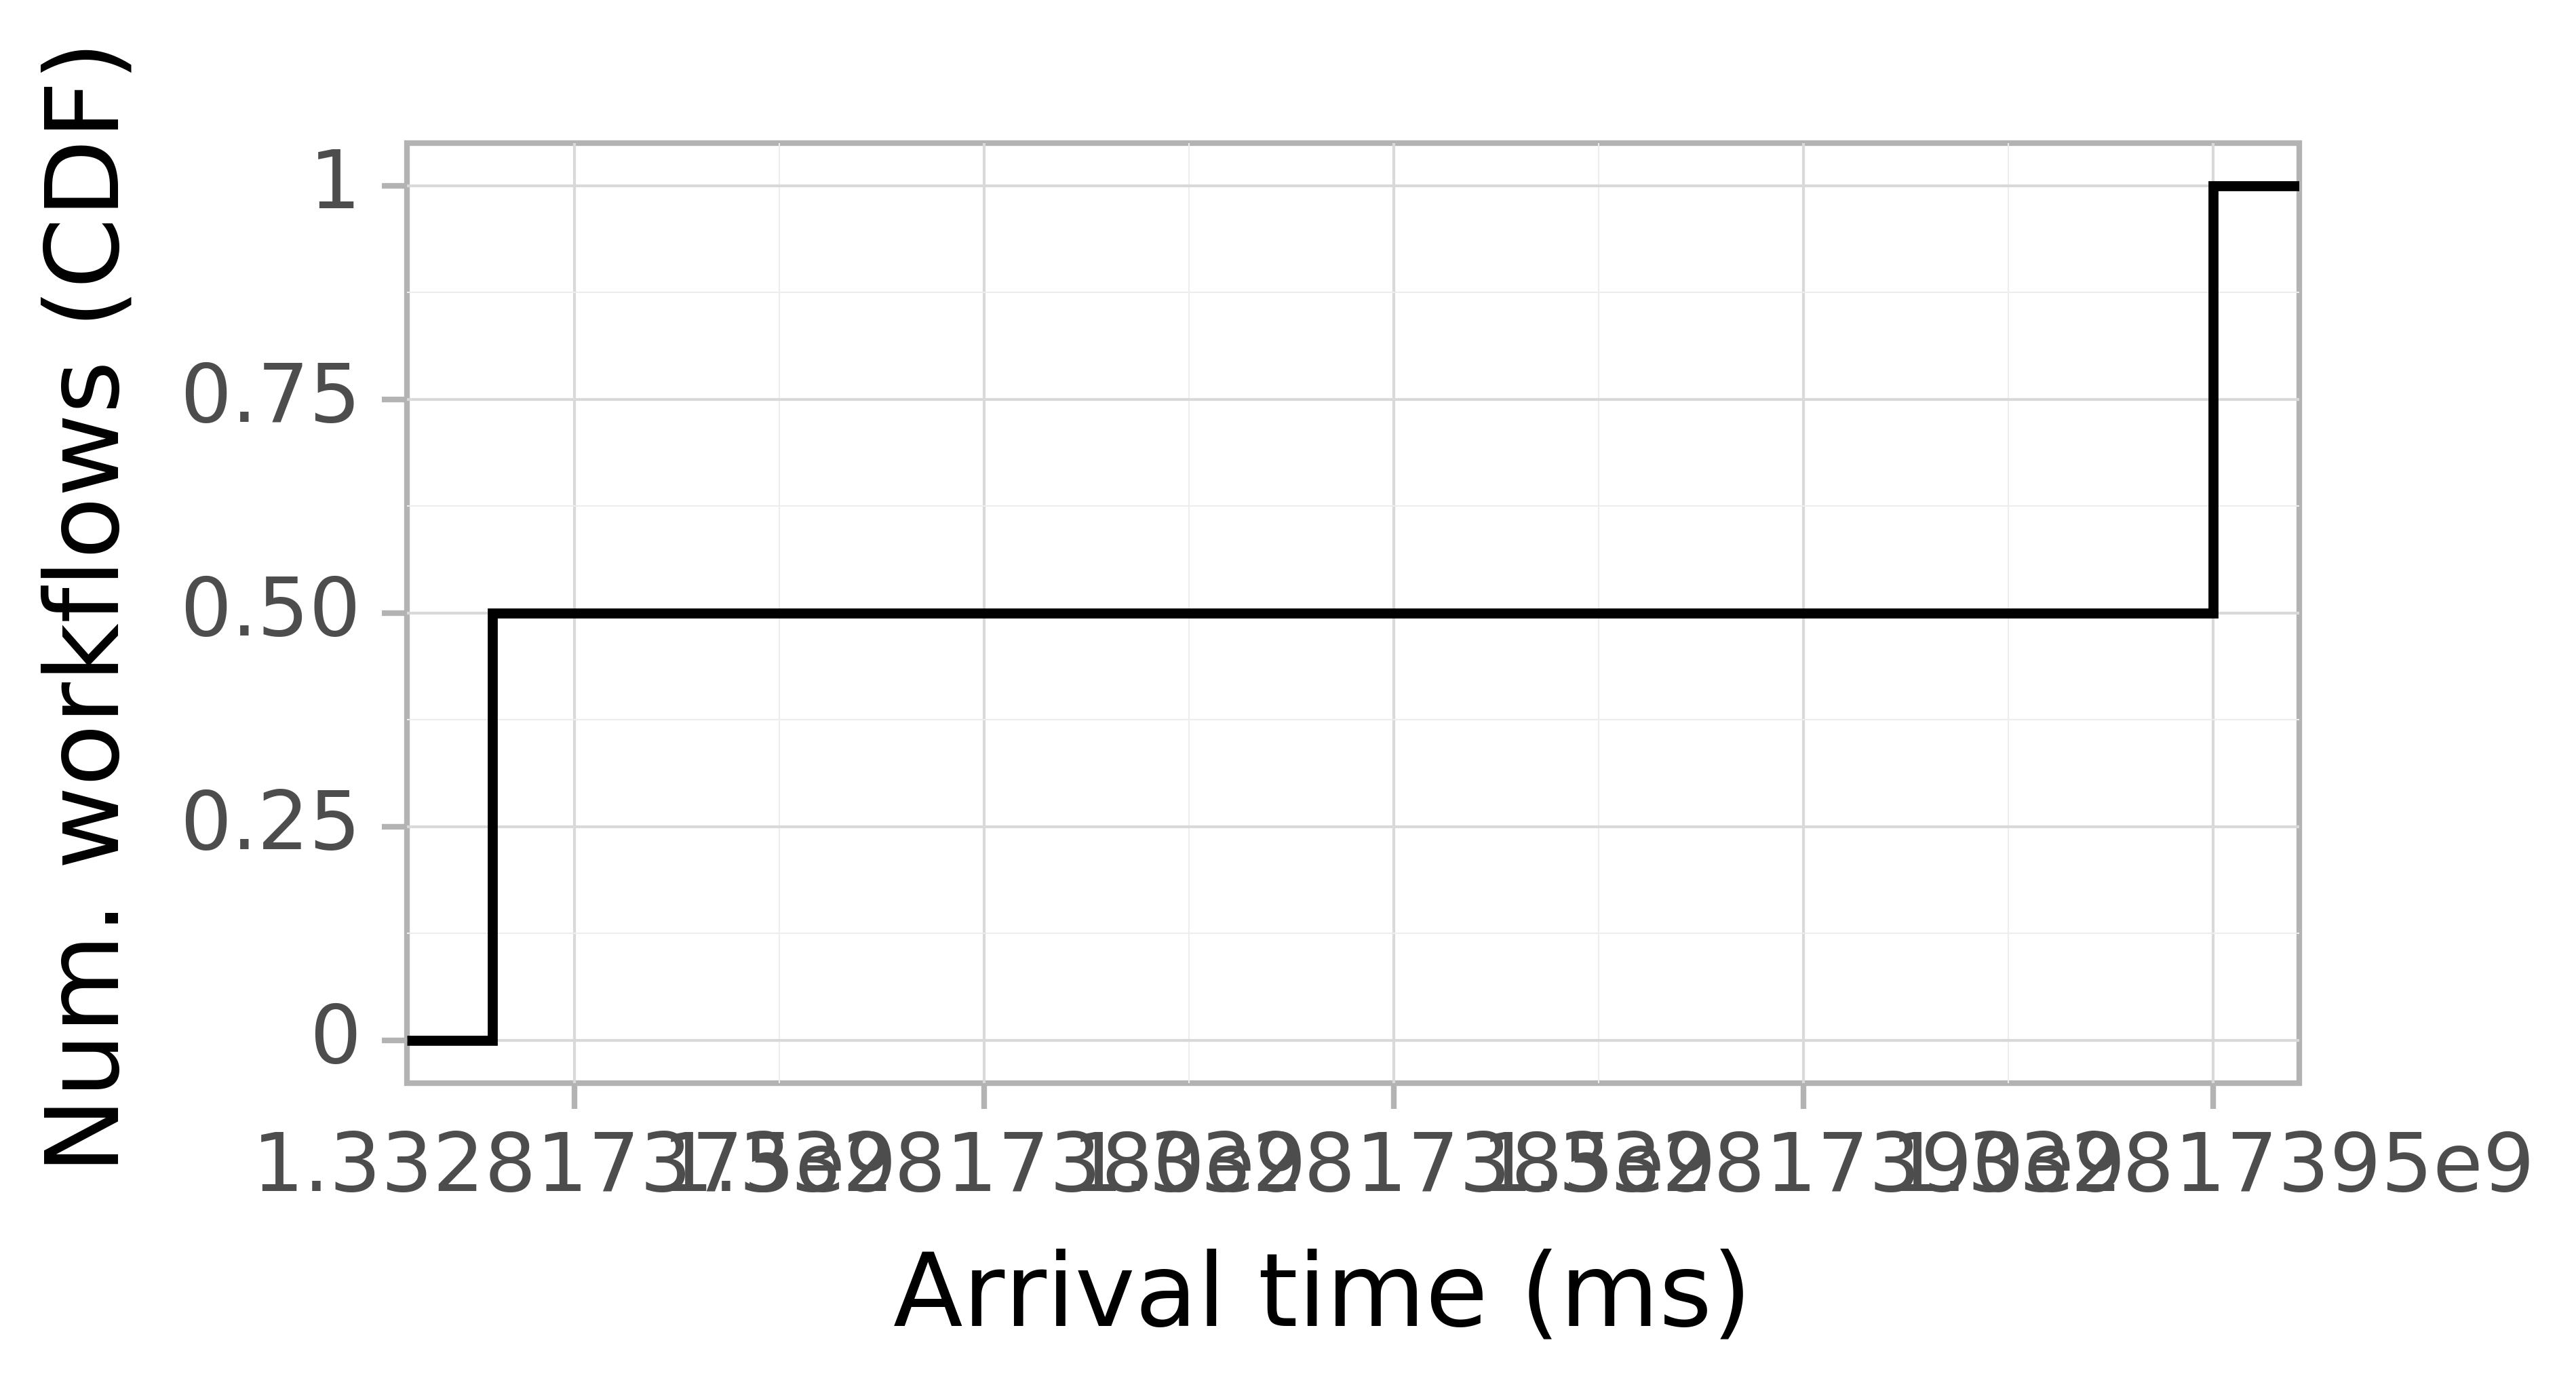 Job arrival CDF graph for the Pegasus_P3 trace.